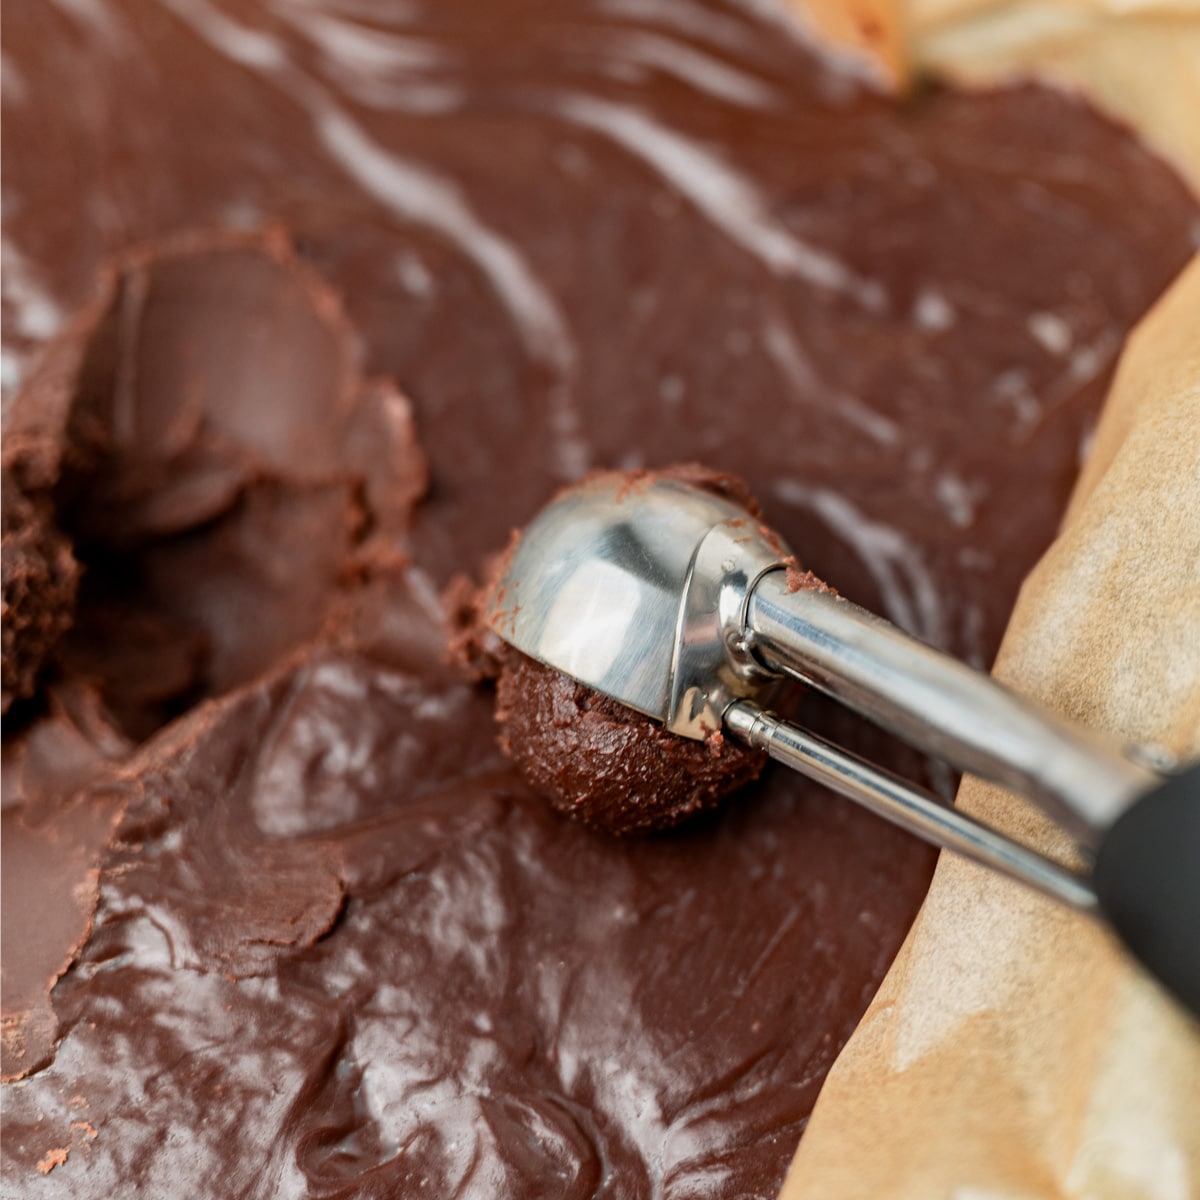 cookie scoop scooping chocolate truffle dough